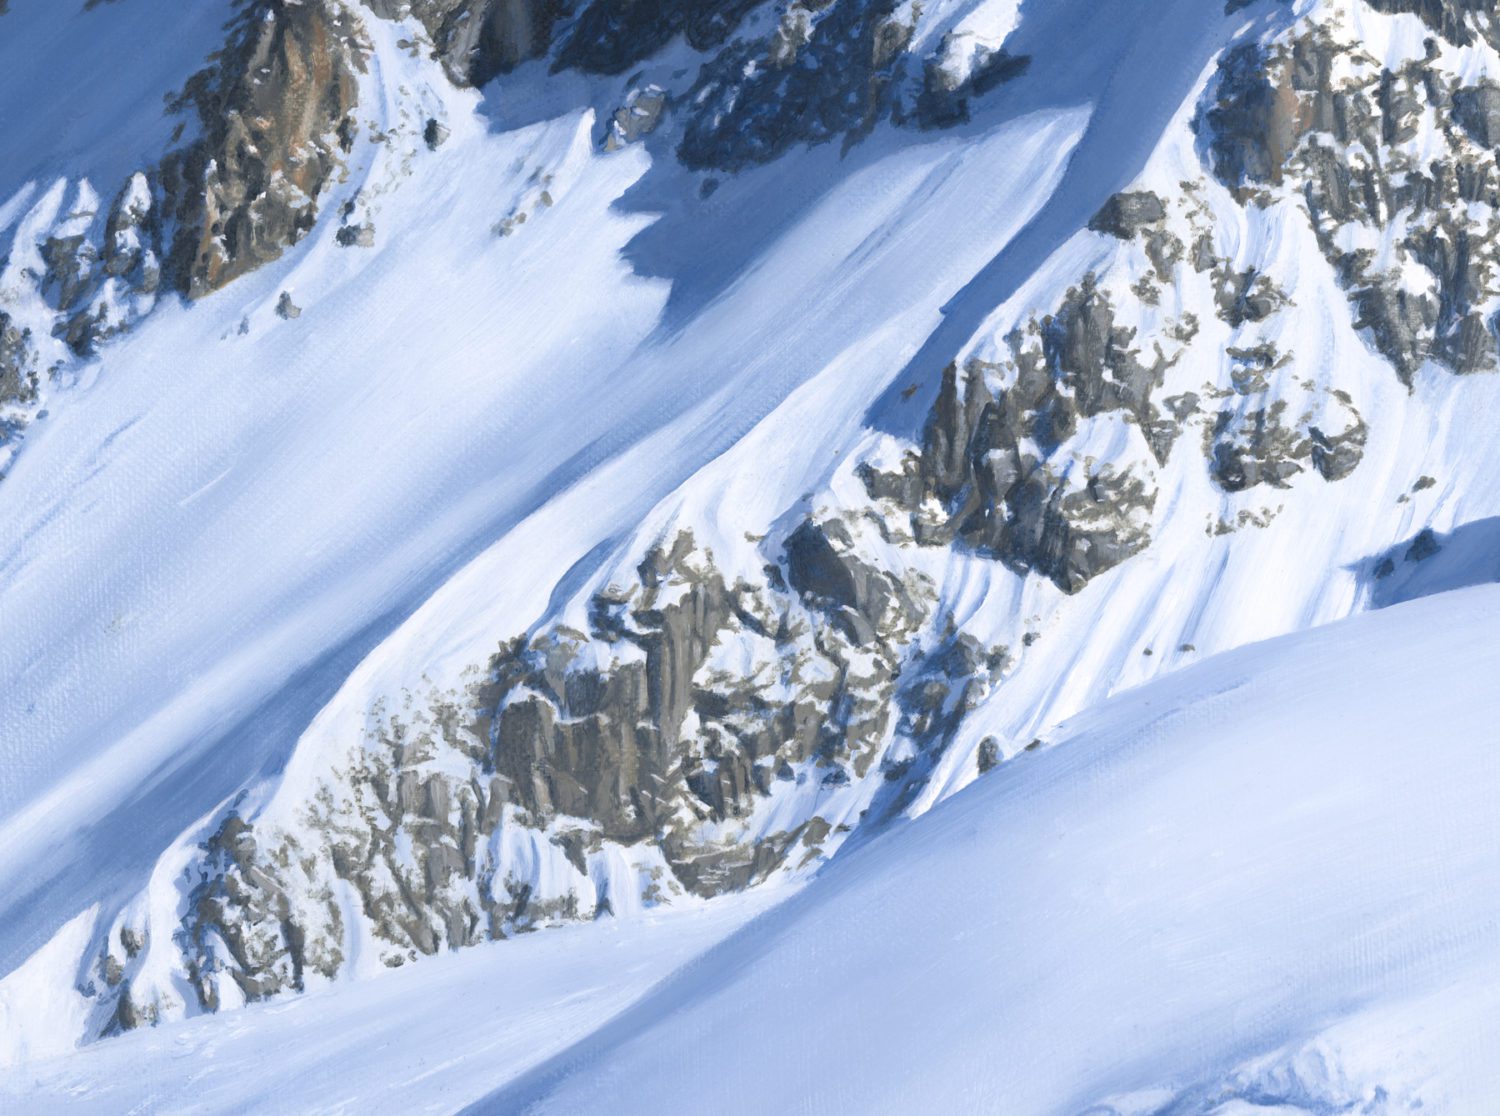 Austria Lech Attew Painting Landscape artist art ski snowboard mountain winter Snow Alpine Alps Montagne Alpes